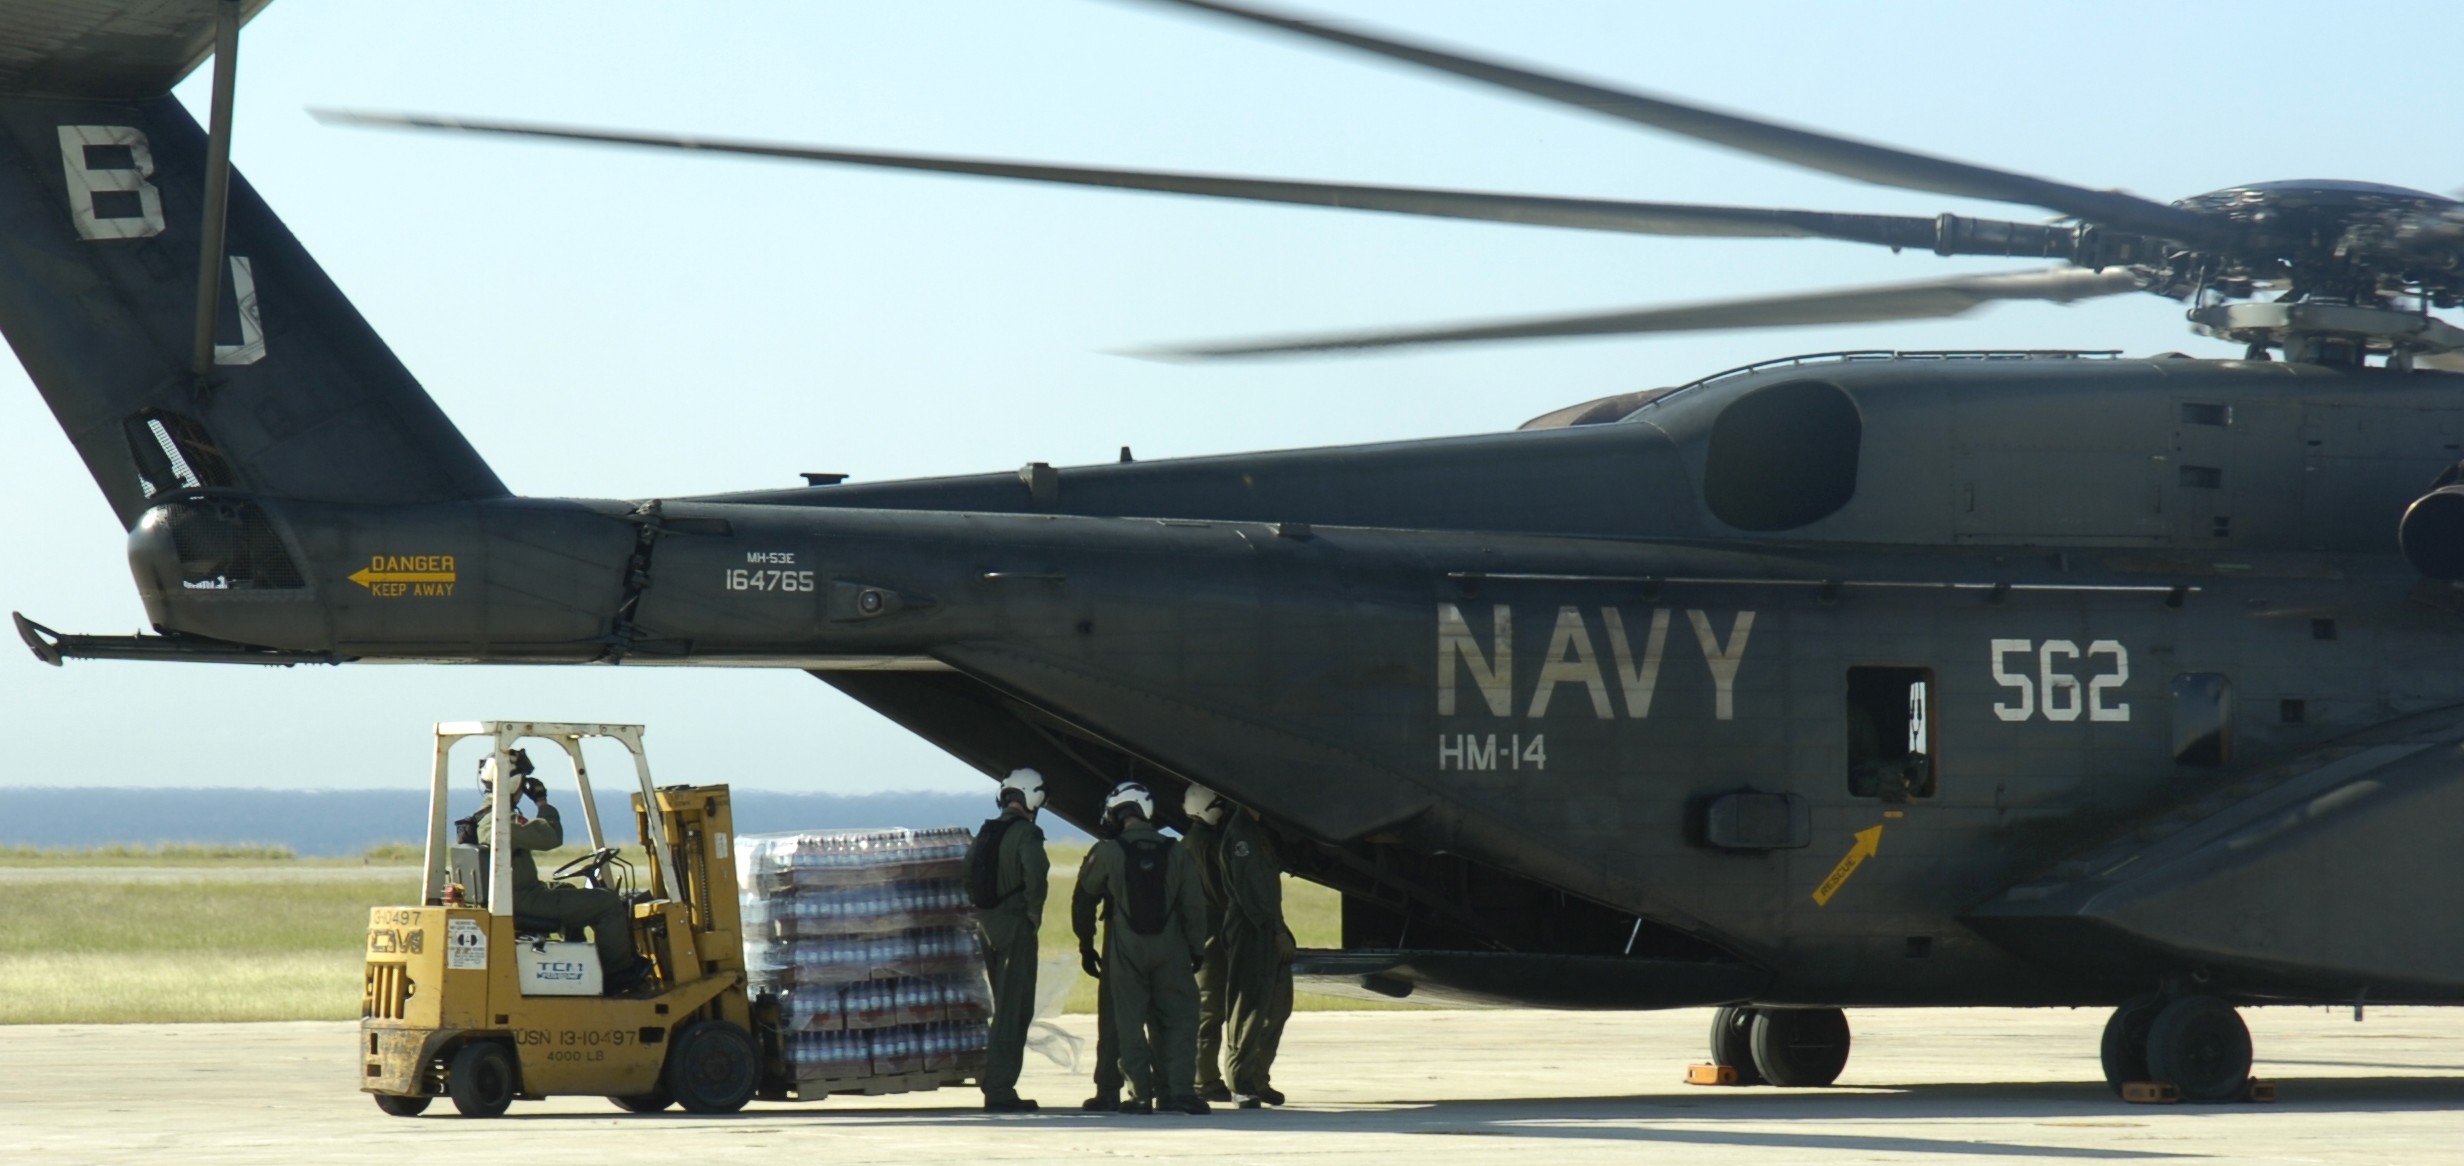 hm-14 vanguard helicopter mine countermeasures squadron navy mh-53e sea dragon 152